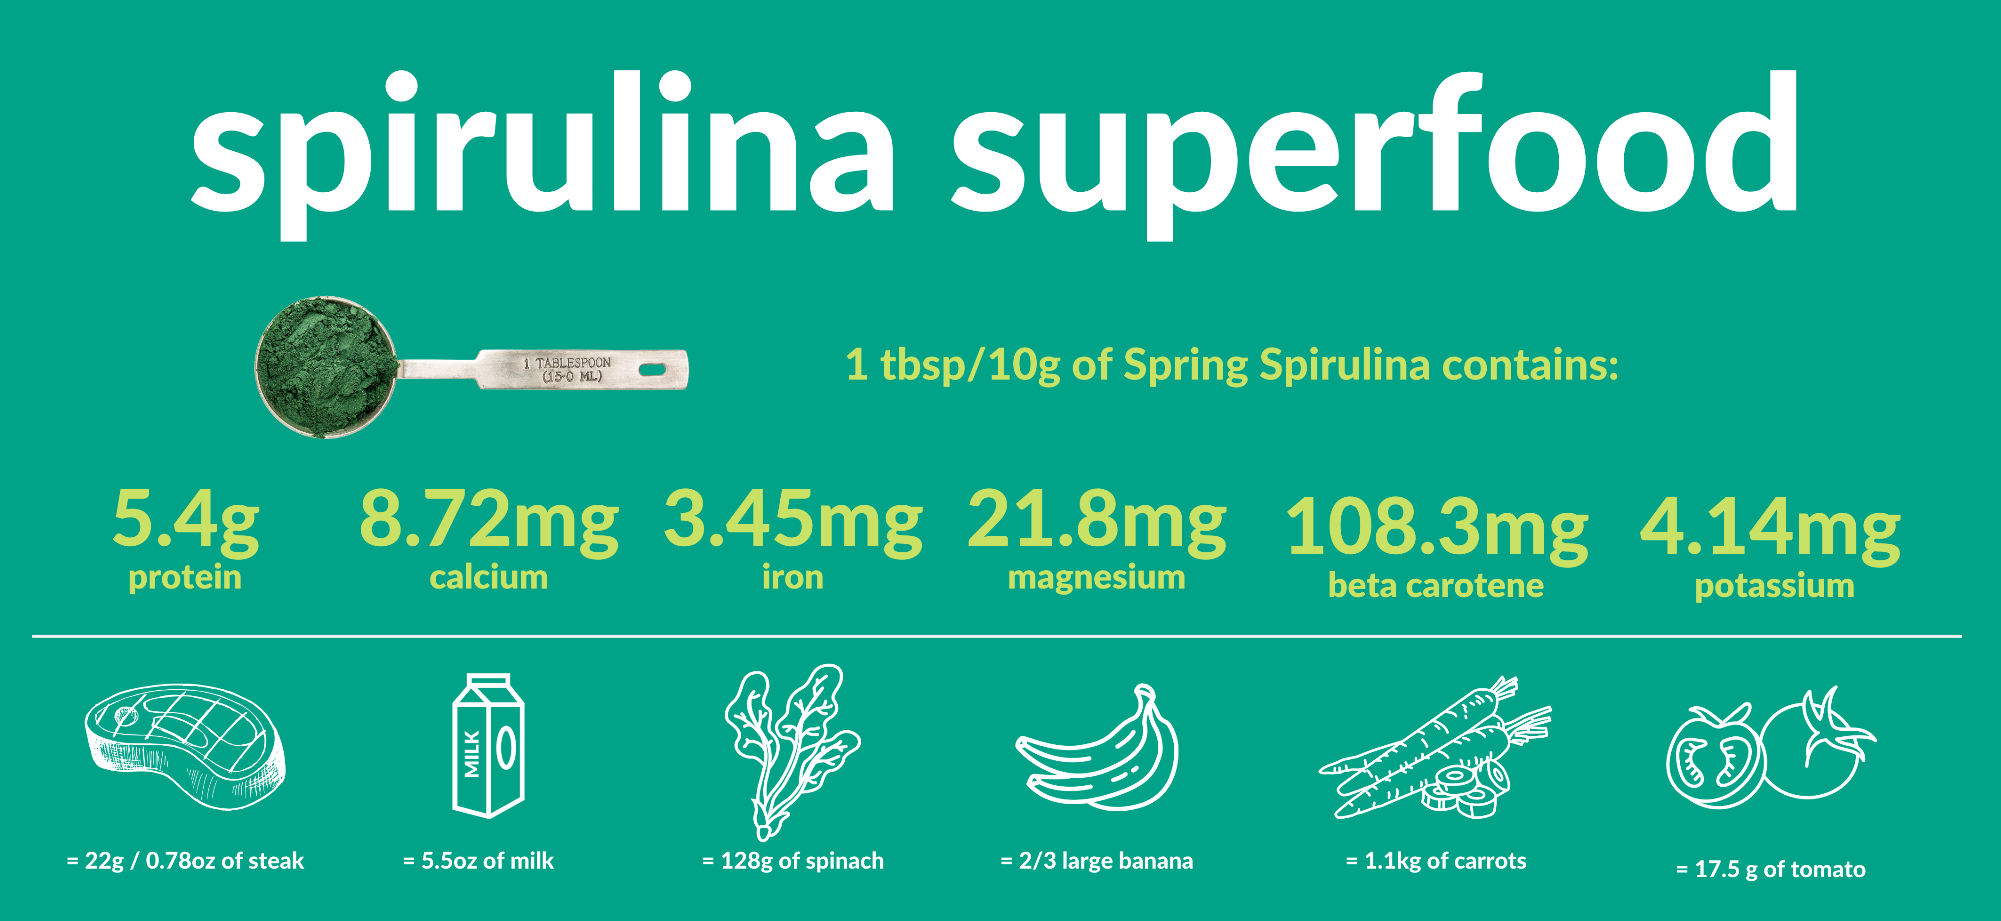 Health Benefits of Spirulina: Nutrition content